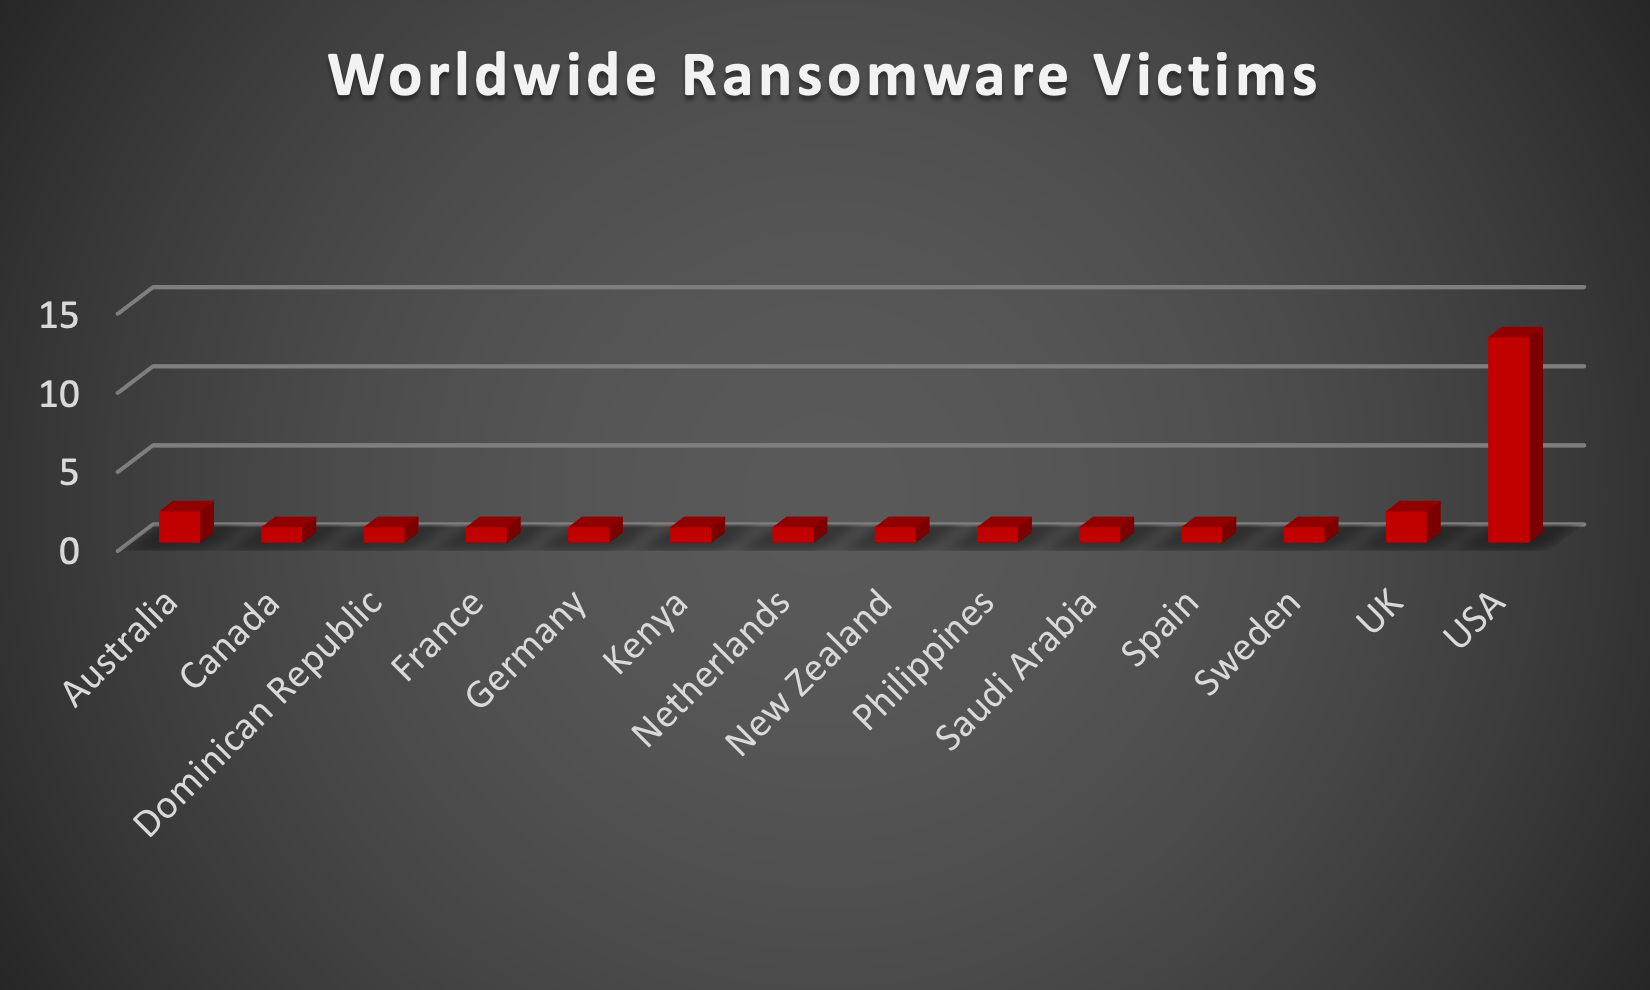 Worldwide Ransomware Victims